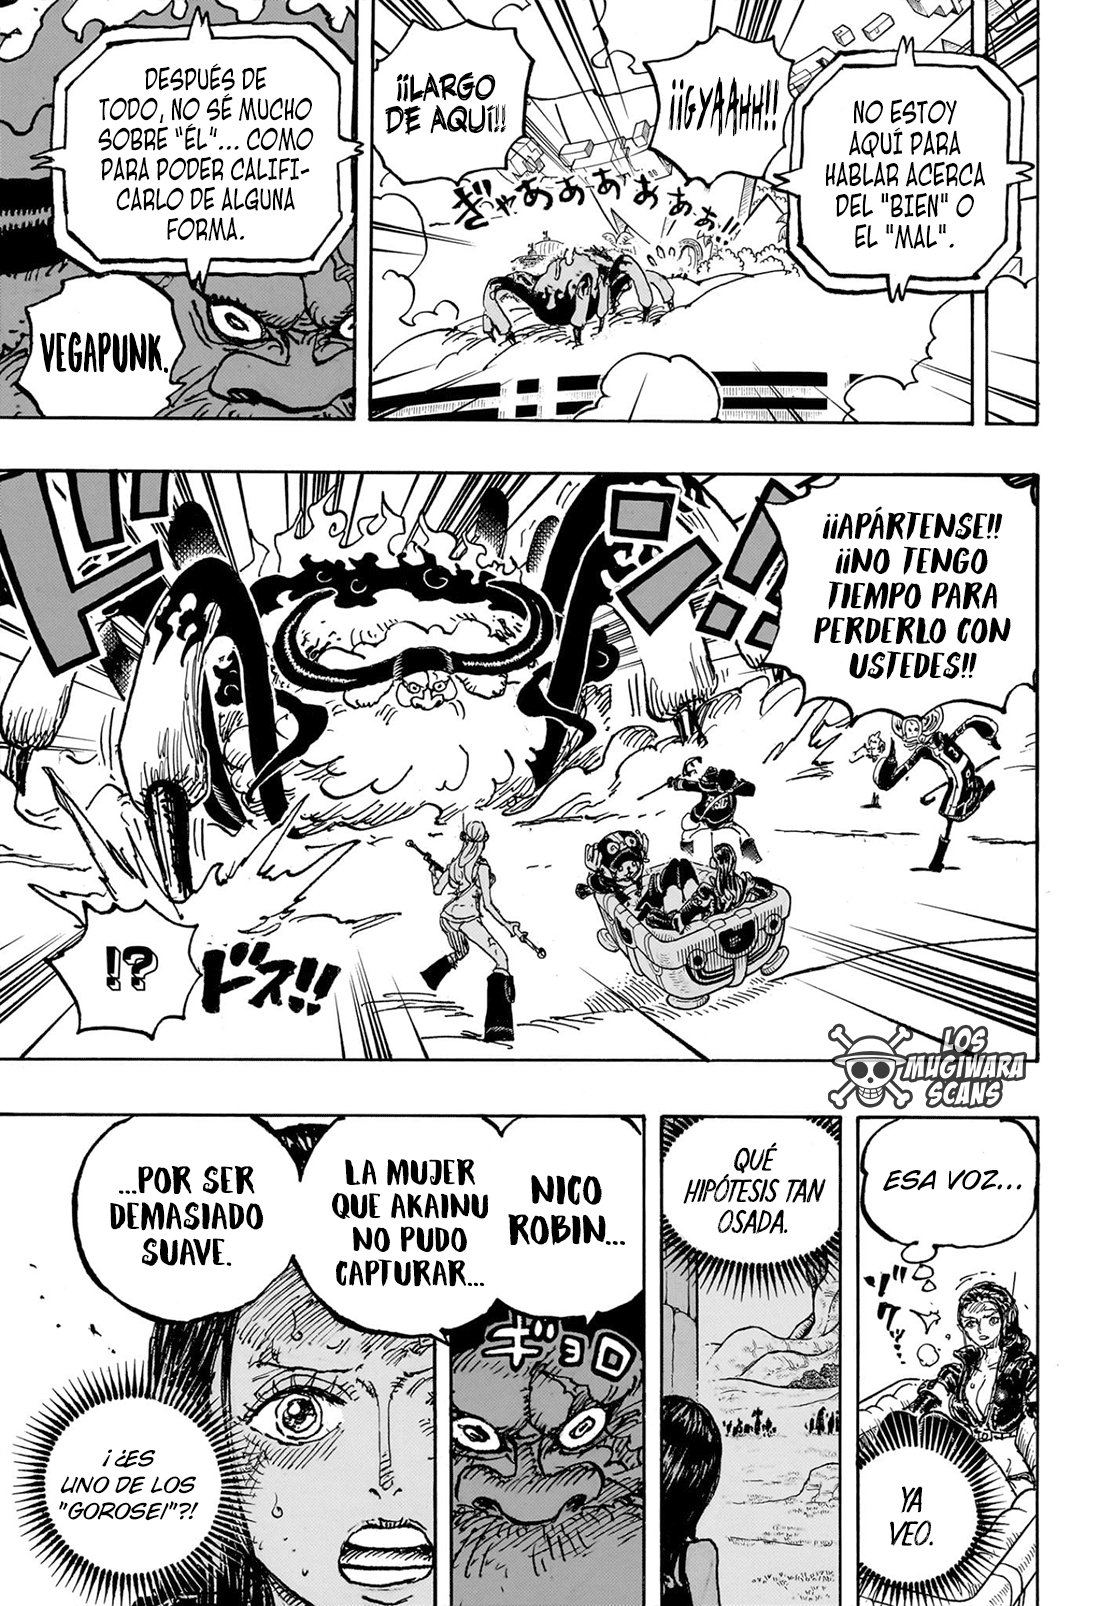 español - One Piece Manga 1113 [Español] 12